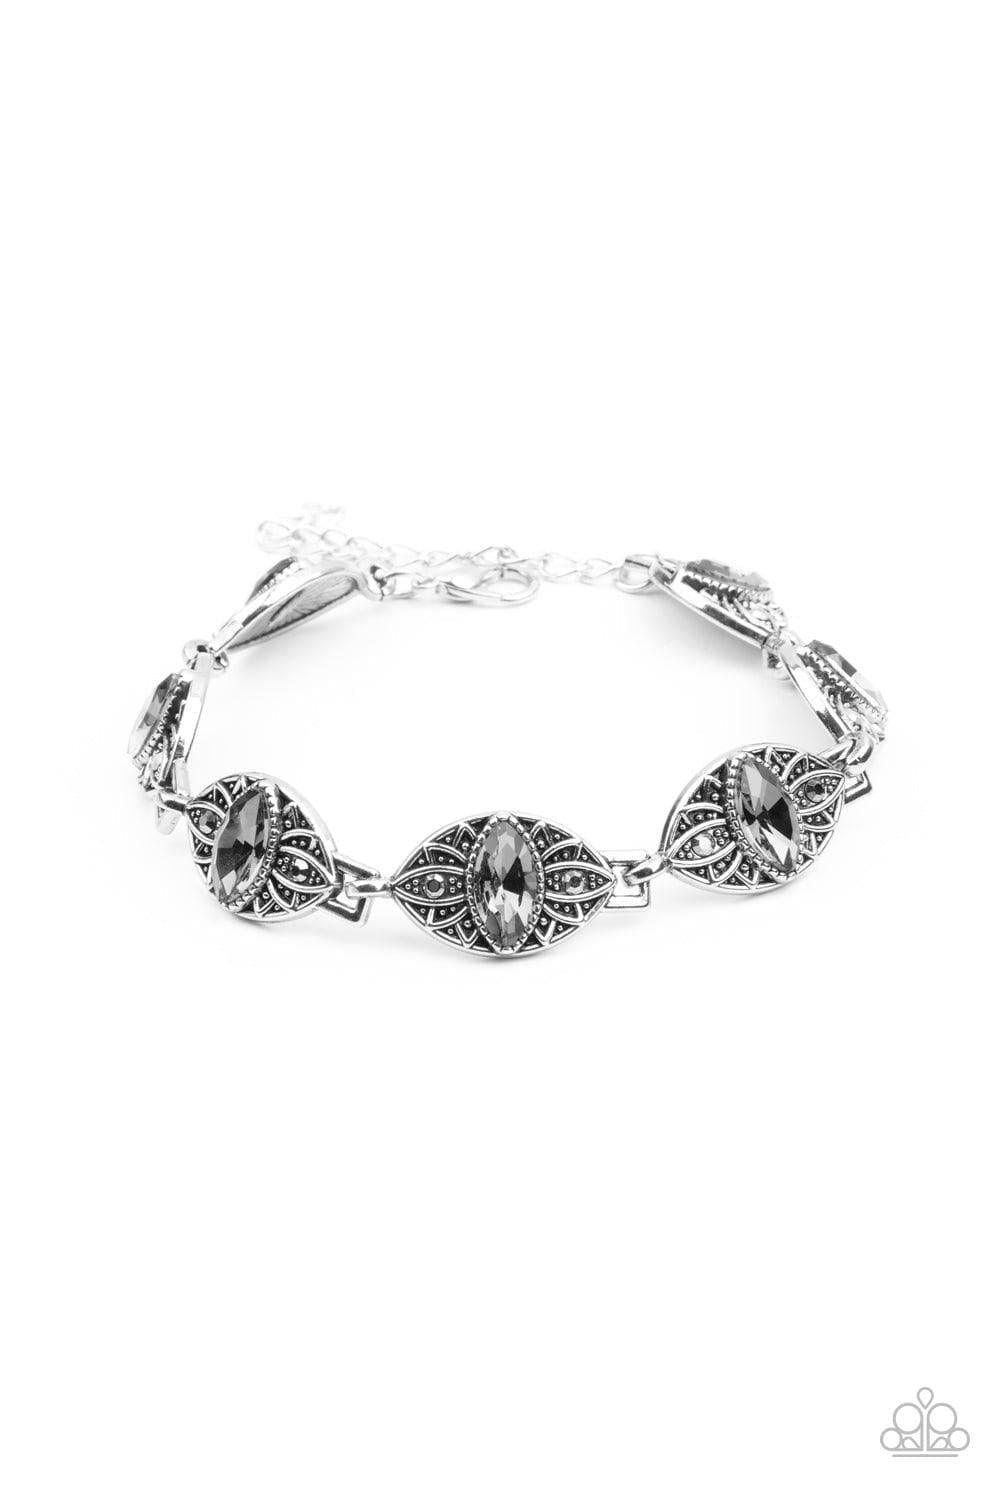 Paparazzi Accessories - Crown Privilege - Silver Bracelet - Bling by JessieK